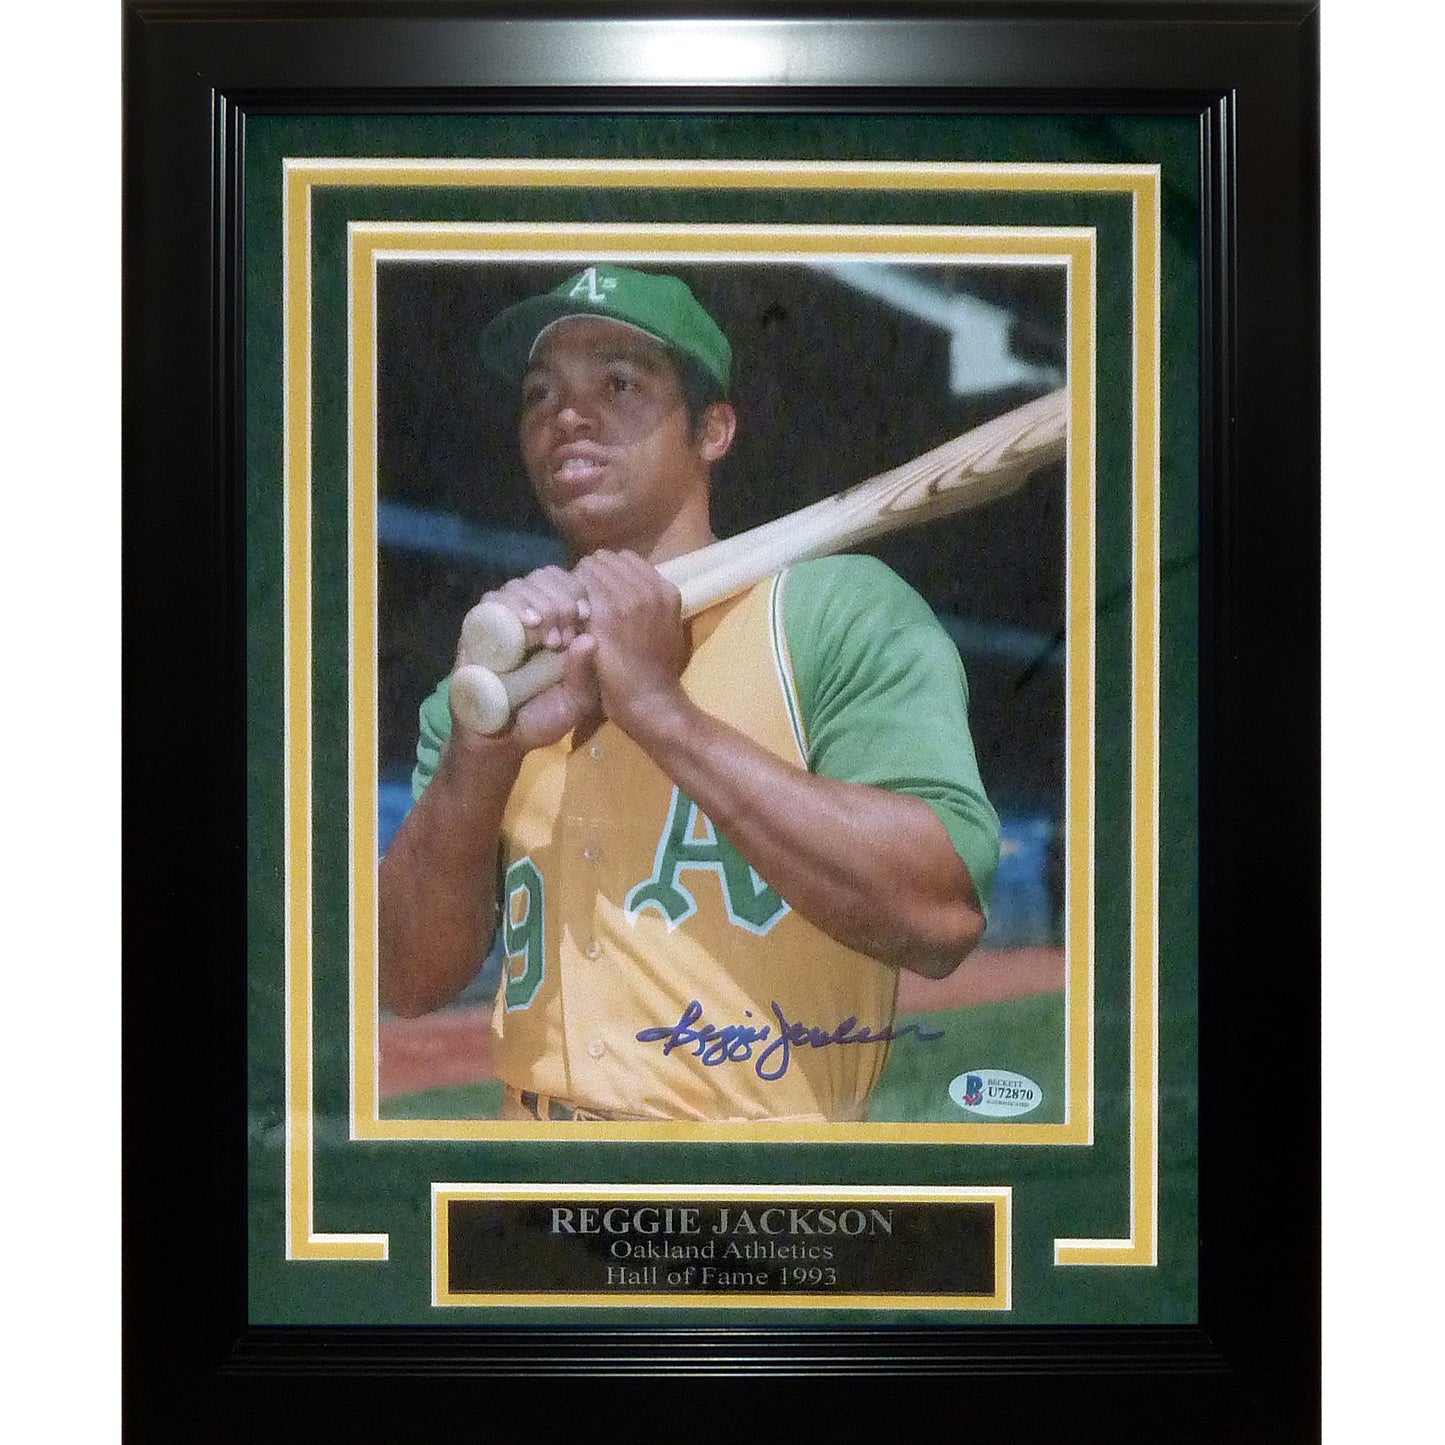 Reggie Jackson Autographed Oakland Athletics Deluxe Framed 8x10 Photo - Beckett